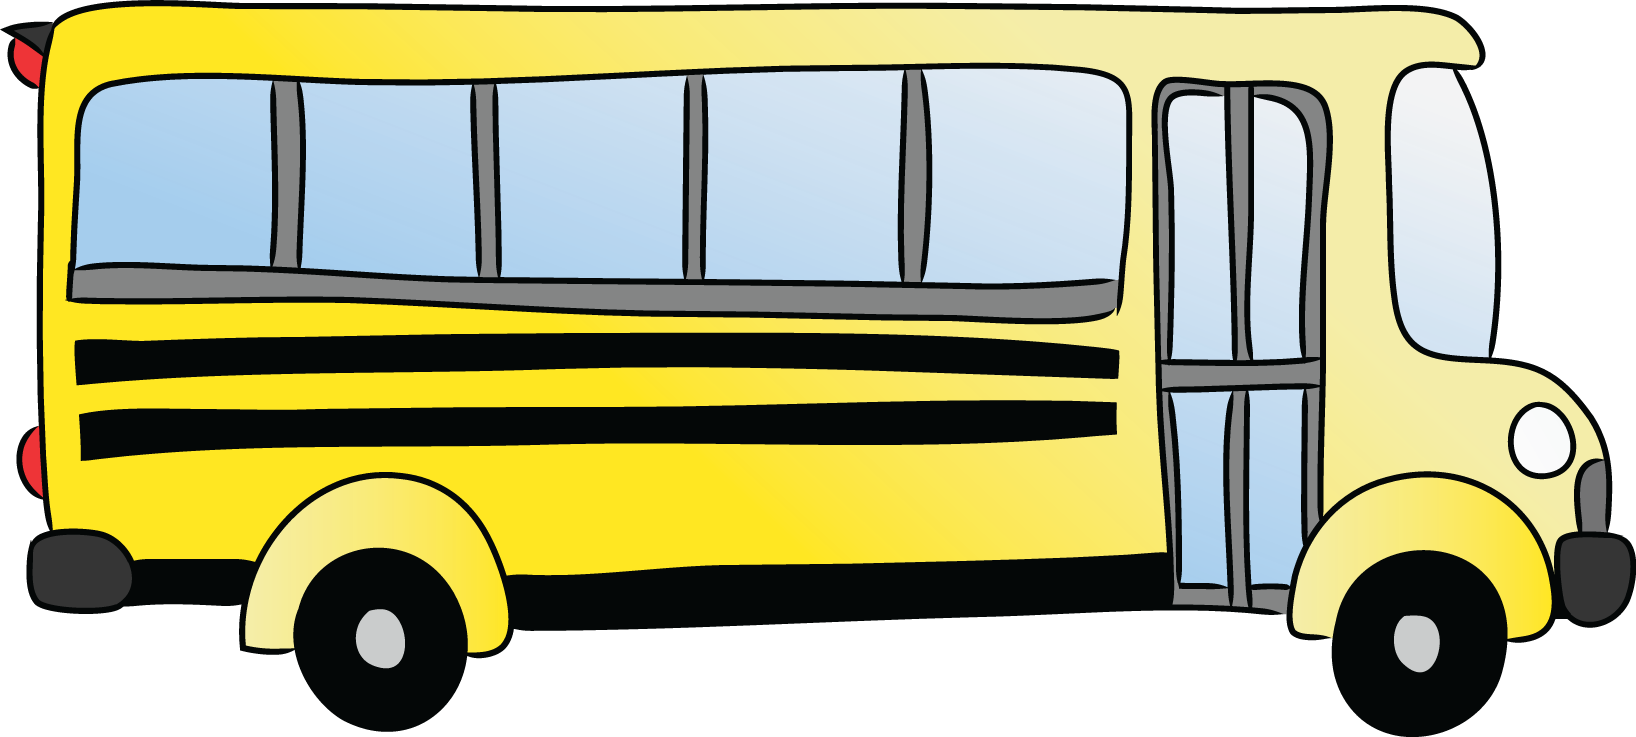 Free clip art school bus